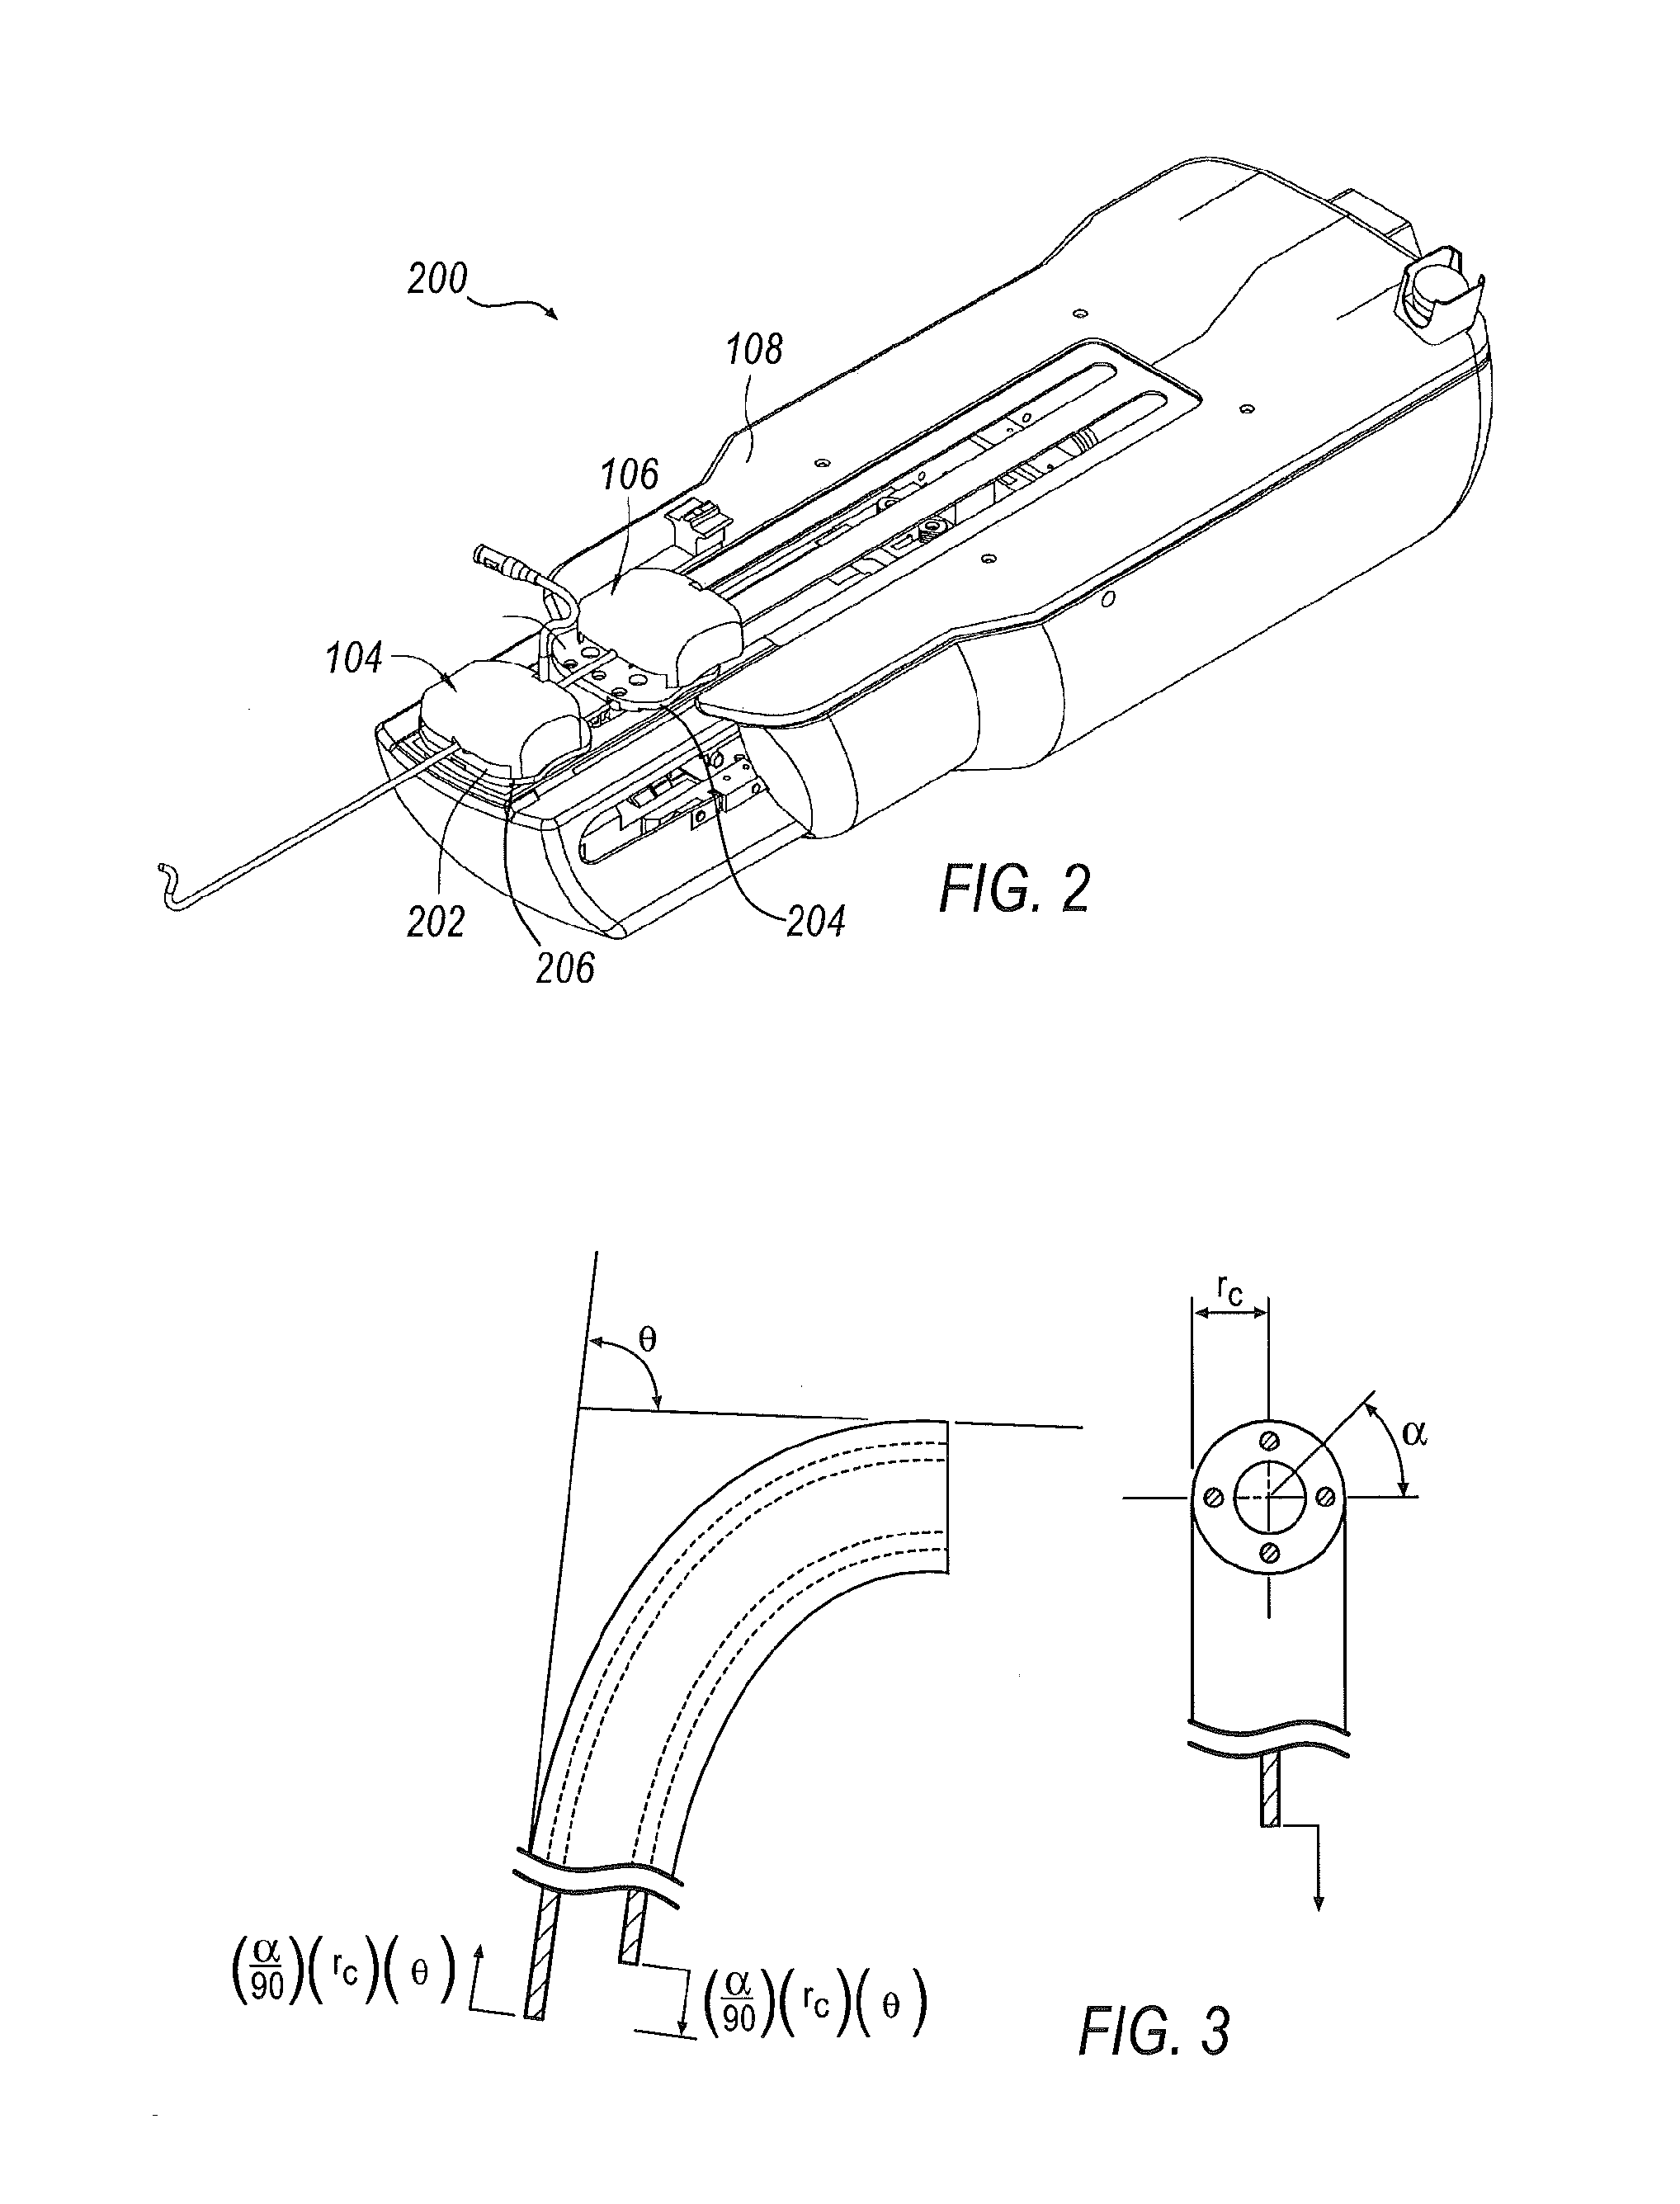 Torque-based catheter articulation